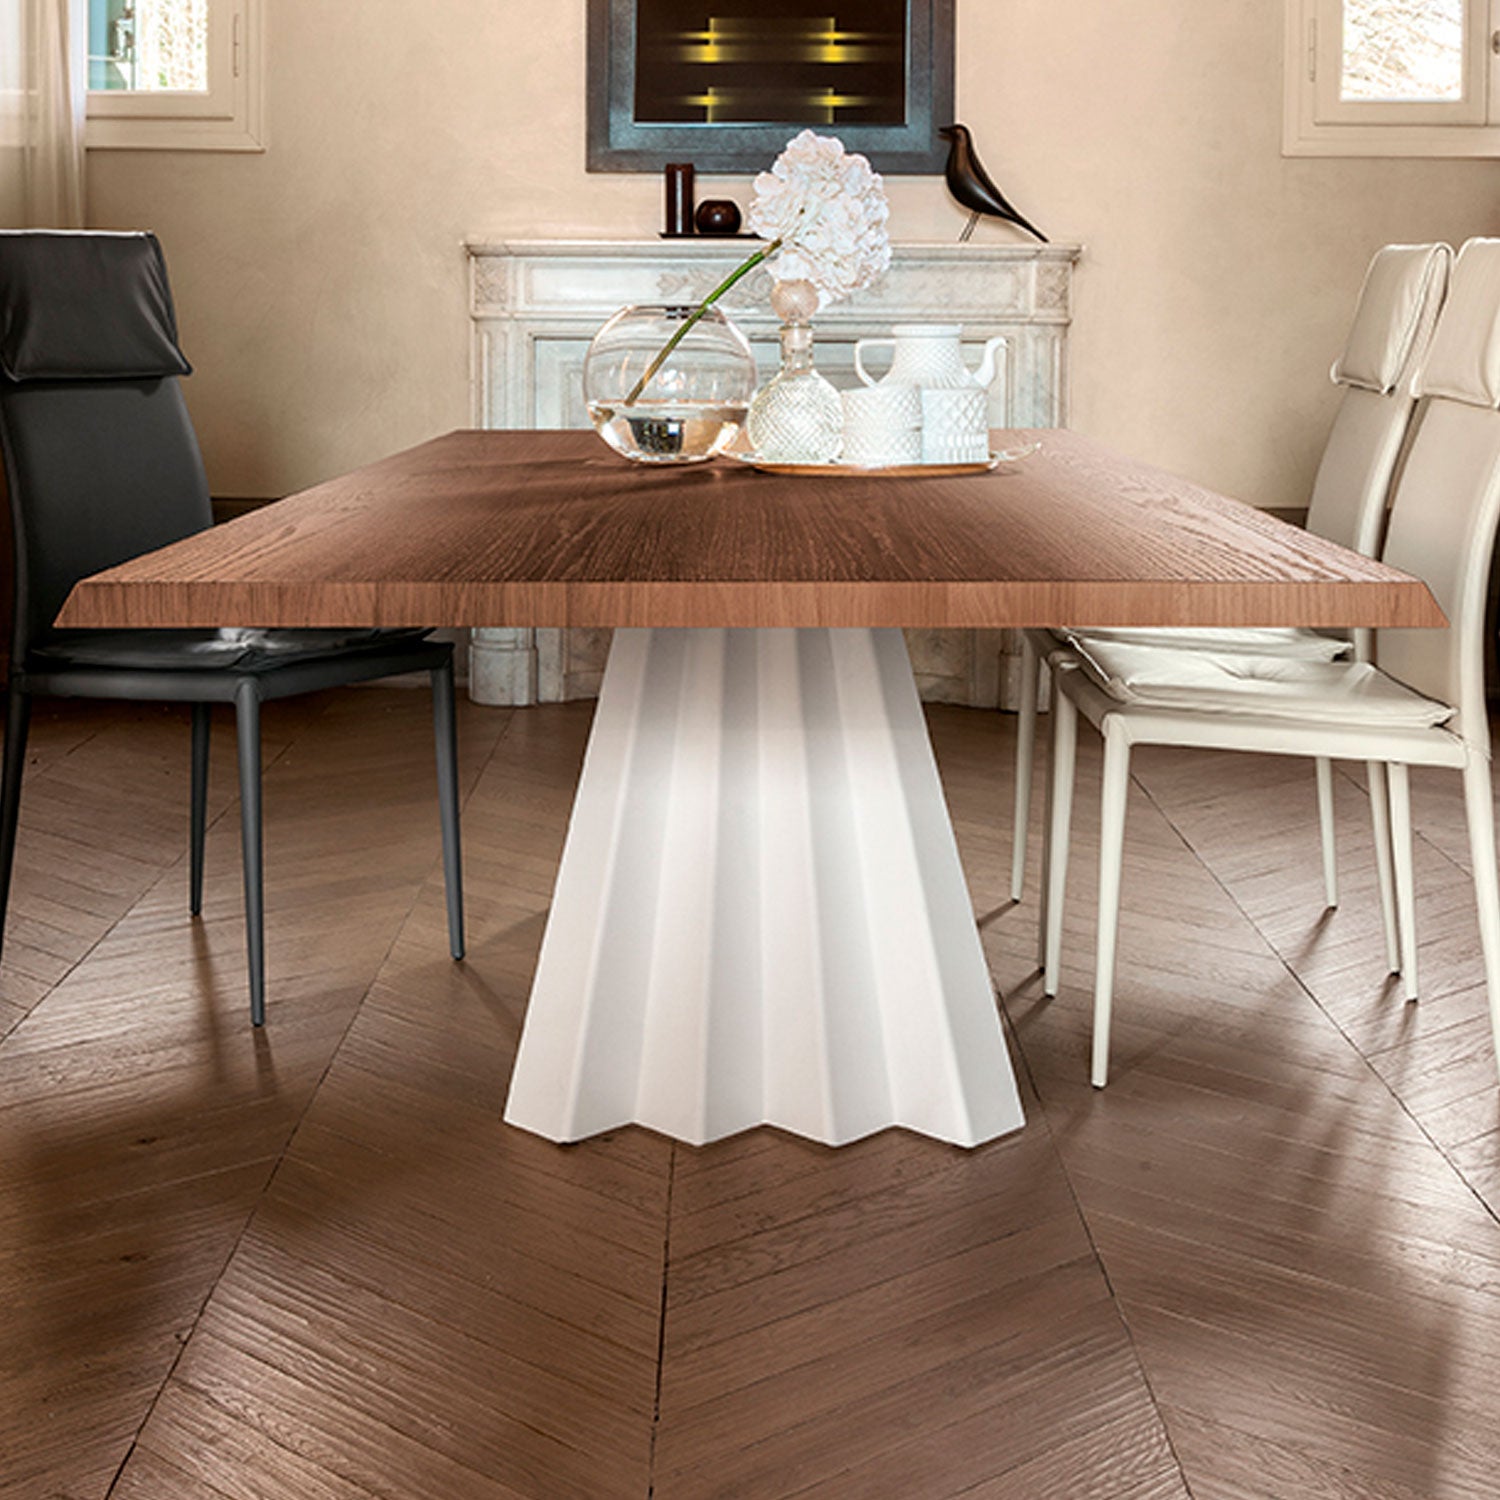 Ventaglio Extendable Table by Tonin Casa